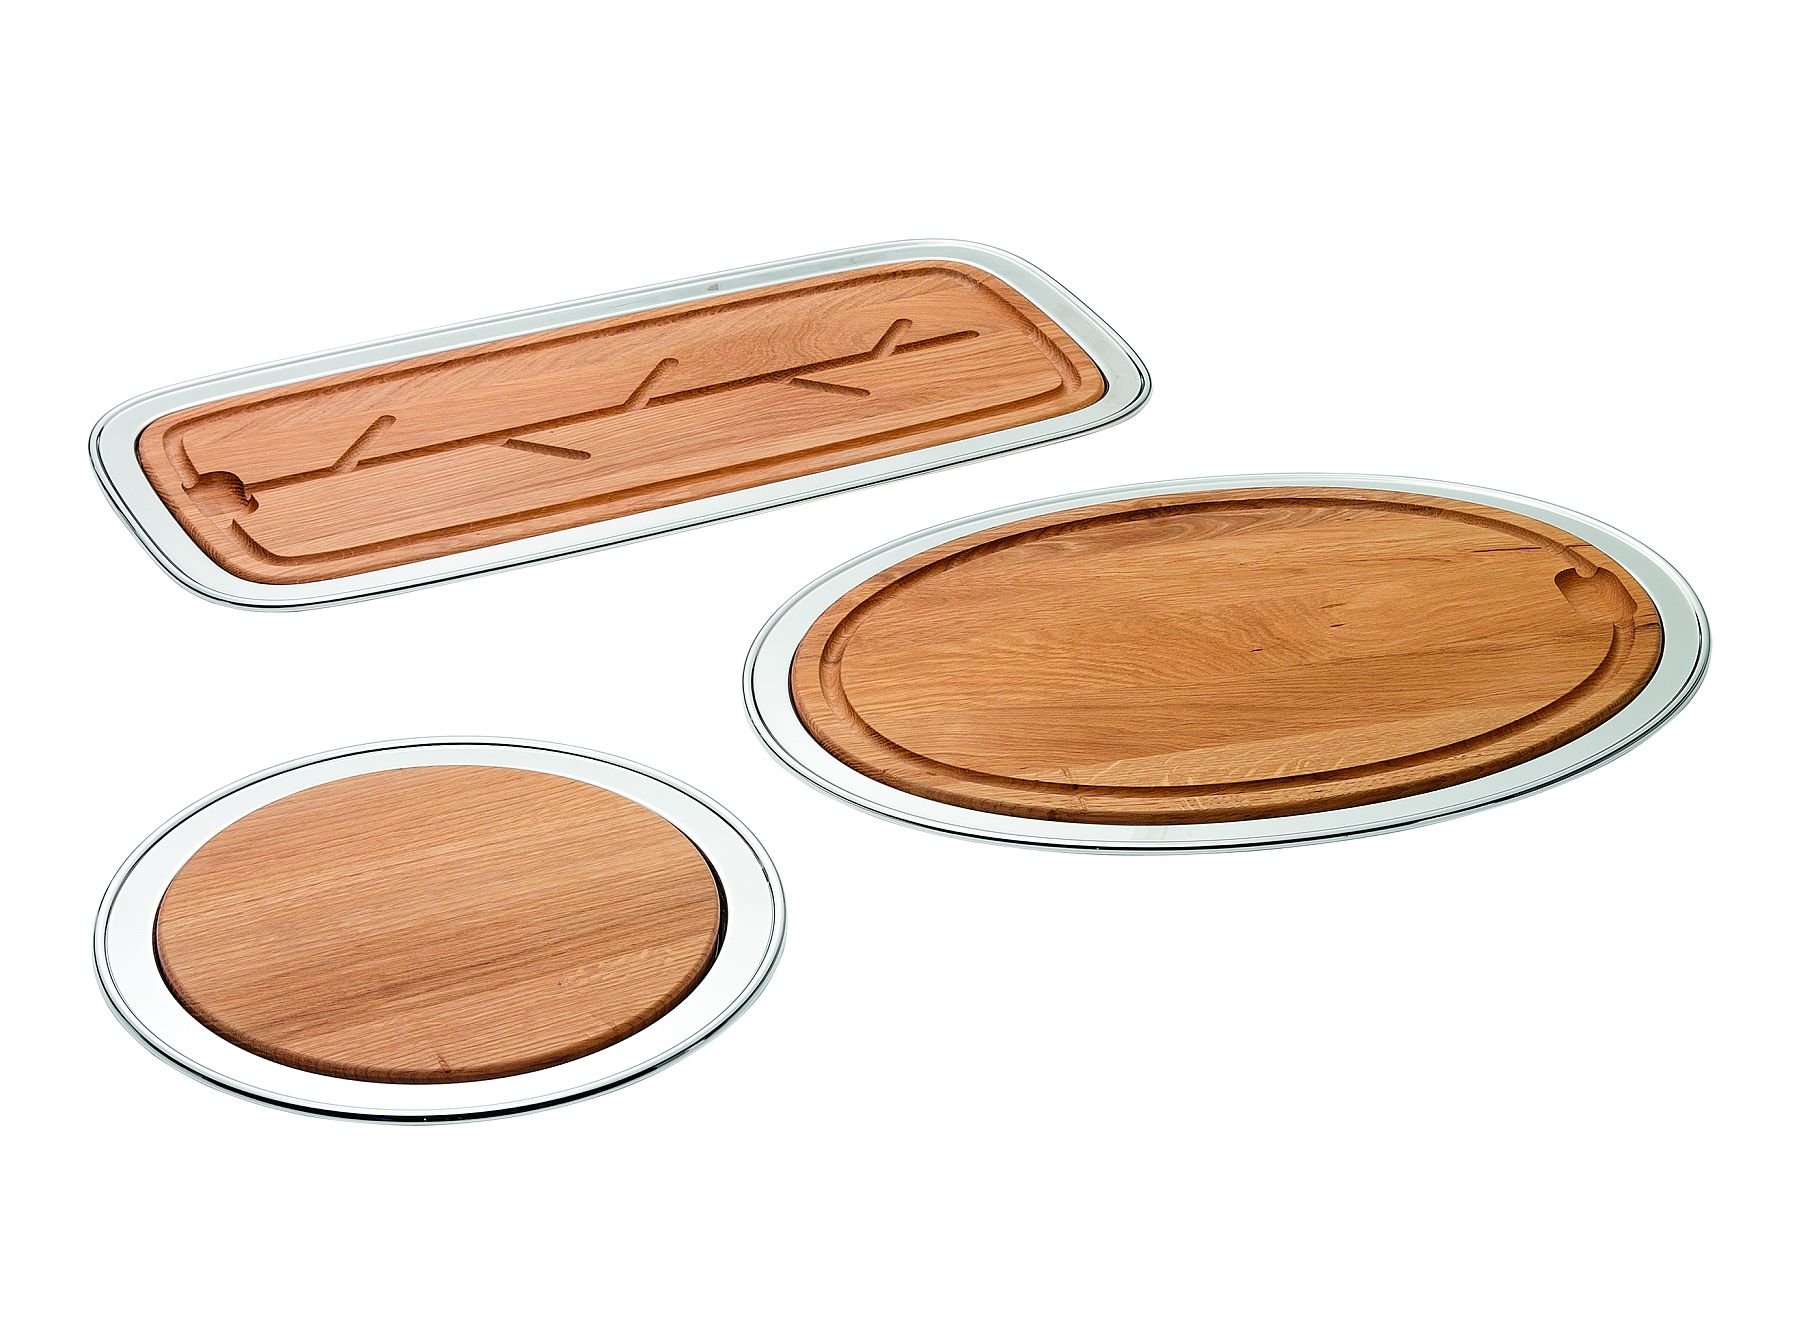 Silver & wood serving platters